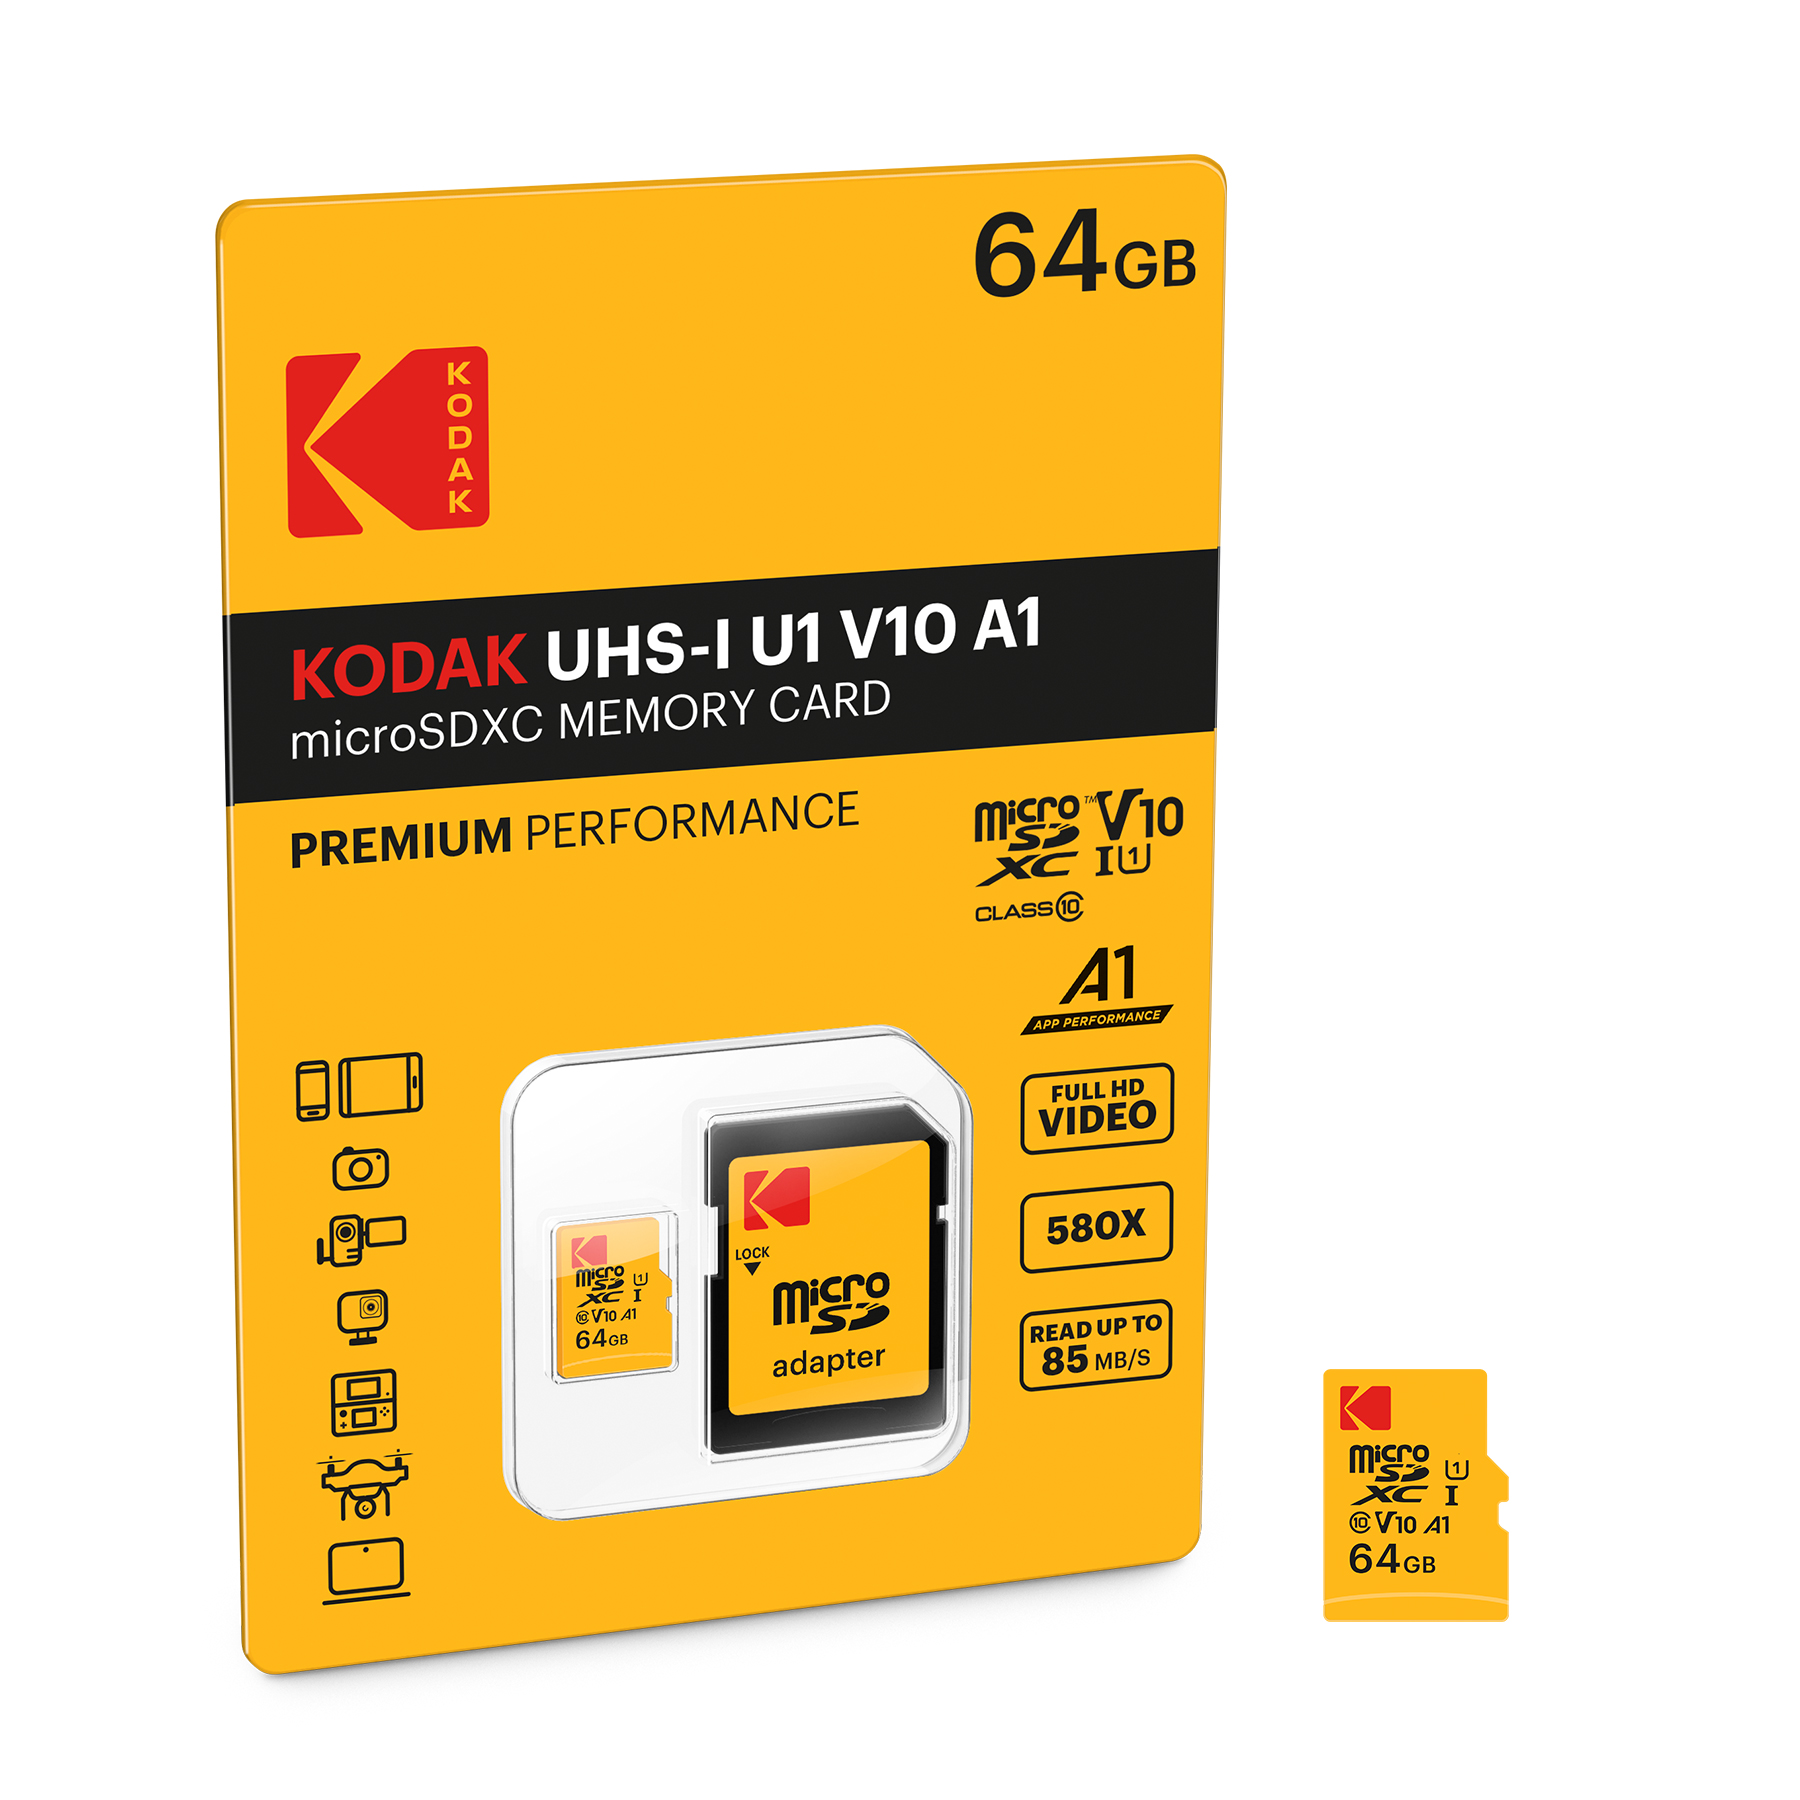 Kodak Micro Sd 64Gb Uhs-I U1 V10 A1 Premium Hafıza Kartı